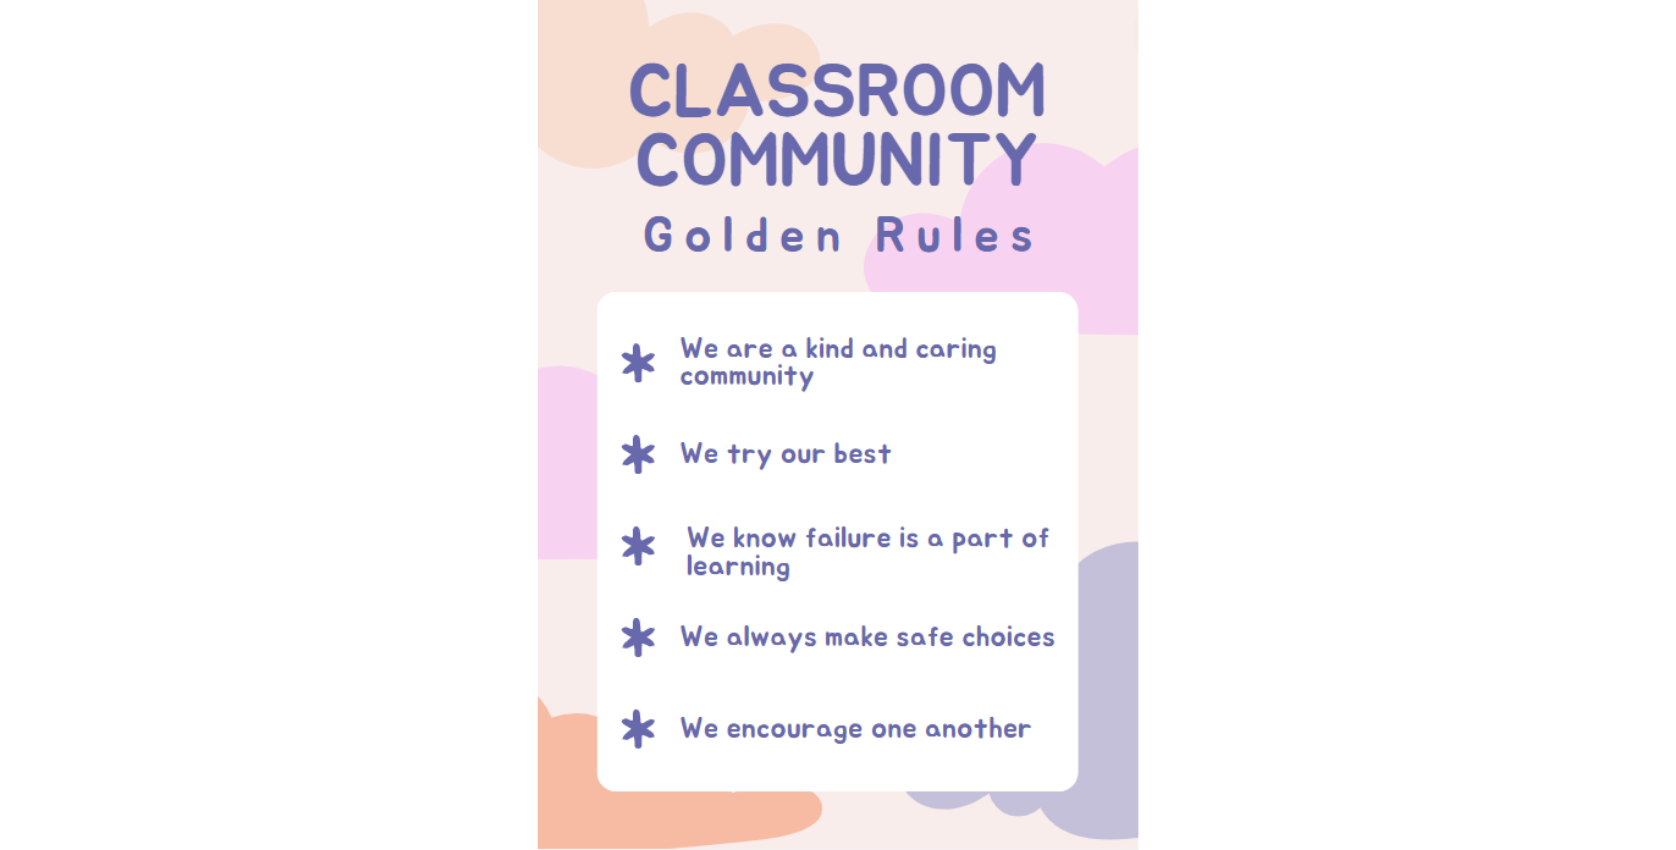 Classroom community rules